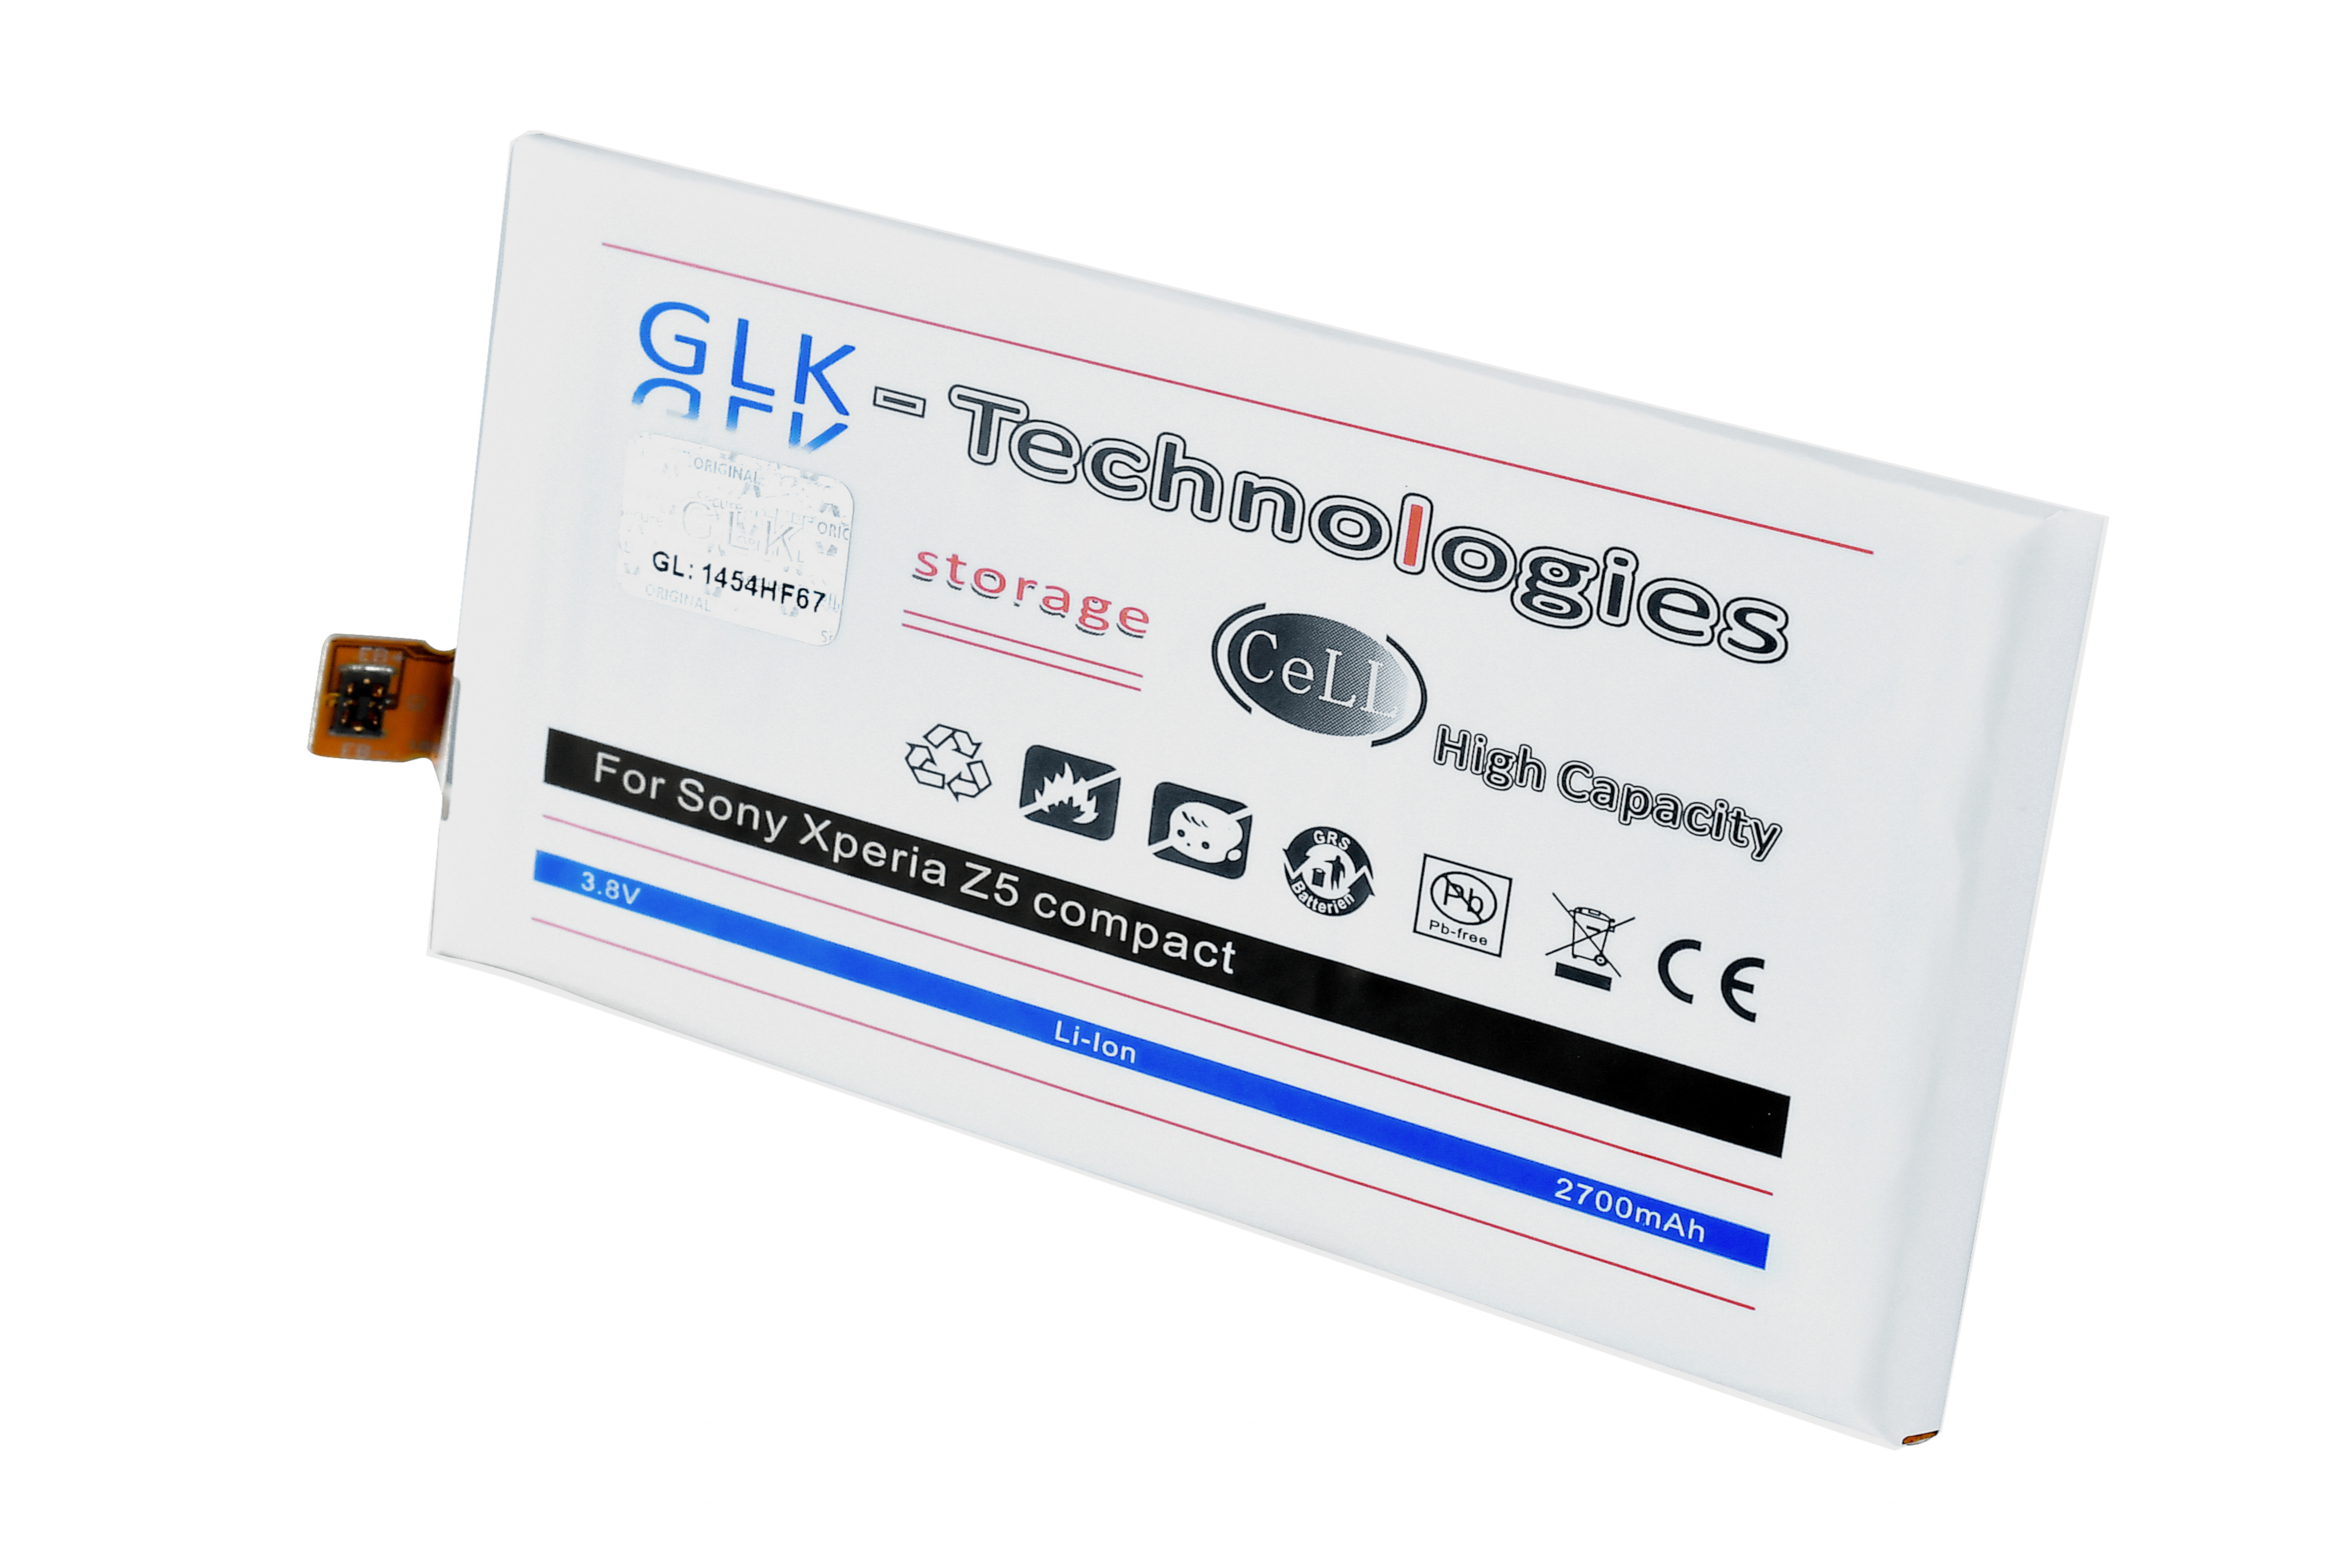 GLK-TECHNOLOGIES High Power Akku inkl. Battery Akku Ersatz Werkzeug Li-Ion LIS1594ERPC Smartphone Compact Sony Z5 mAh 2700 für Xperia